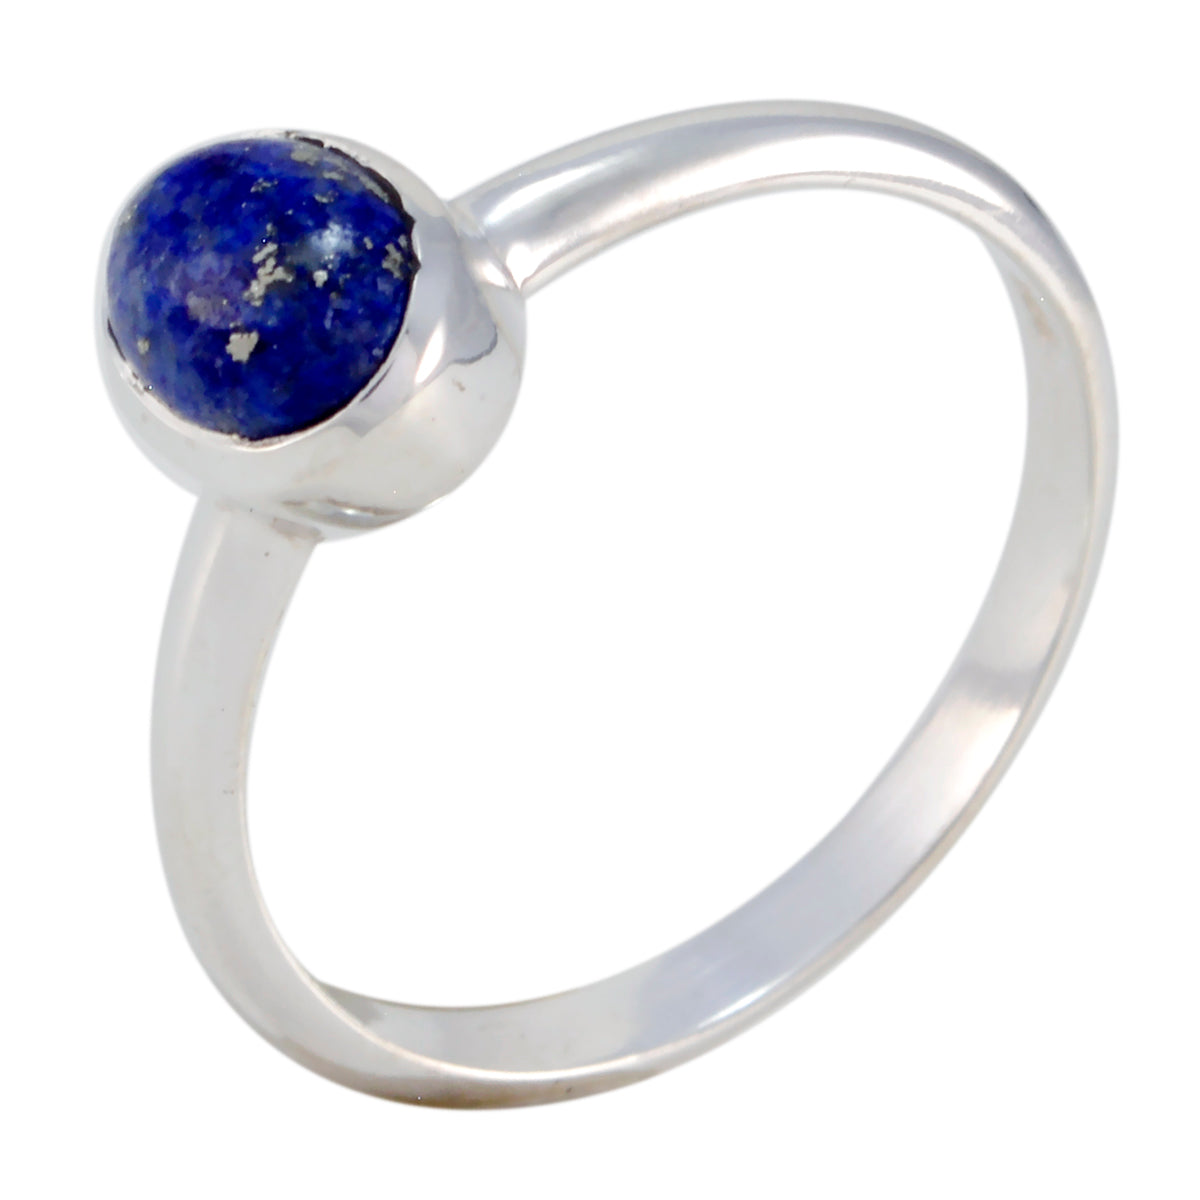 Riyo Bonny Gemstones Lapis Lazuli Sterling Silver Ring Rings